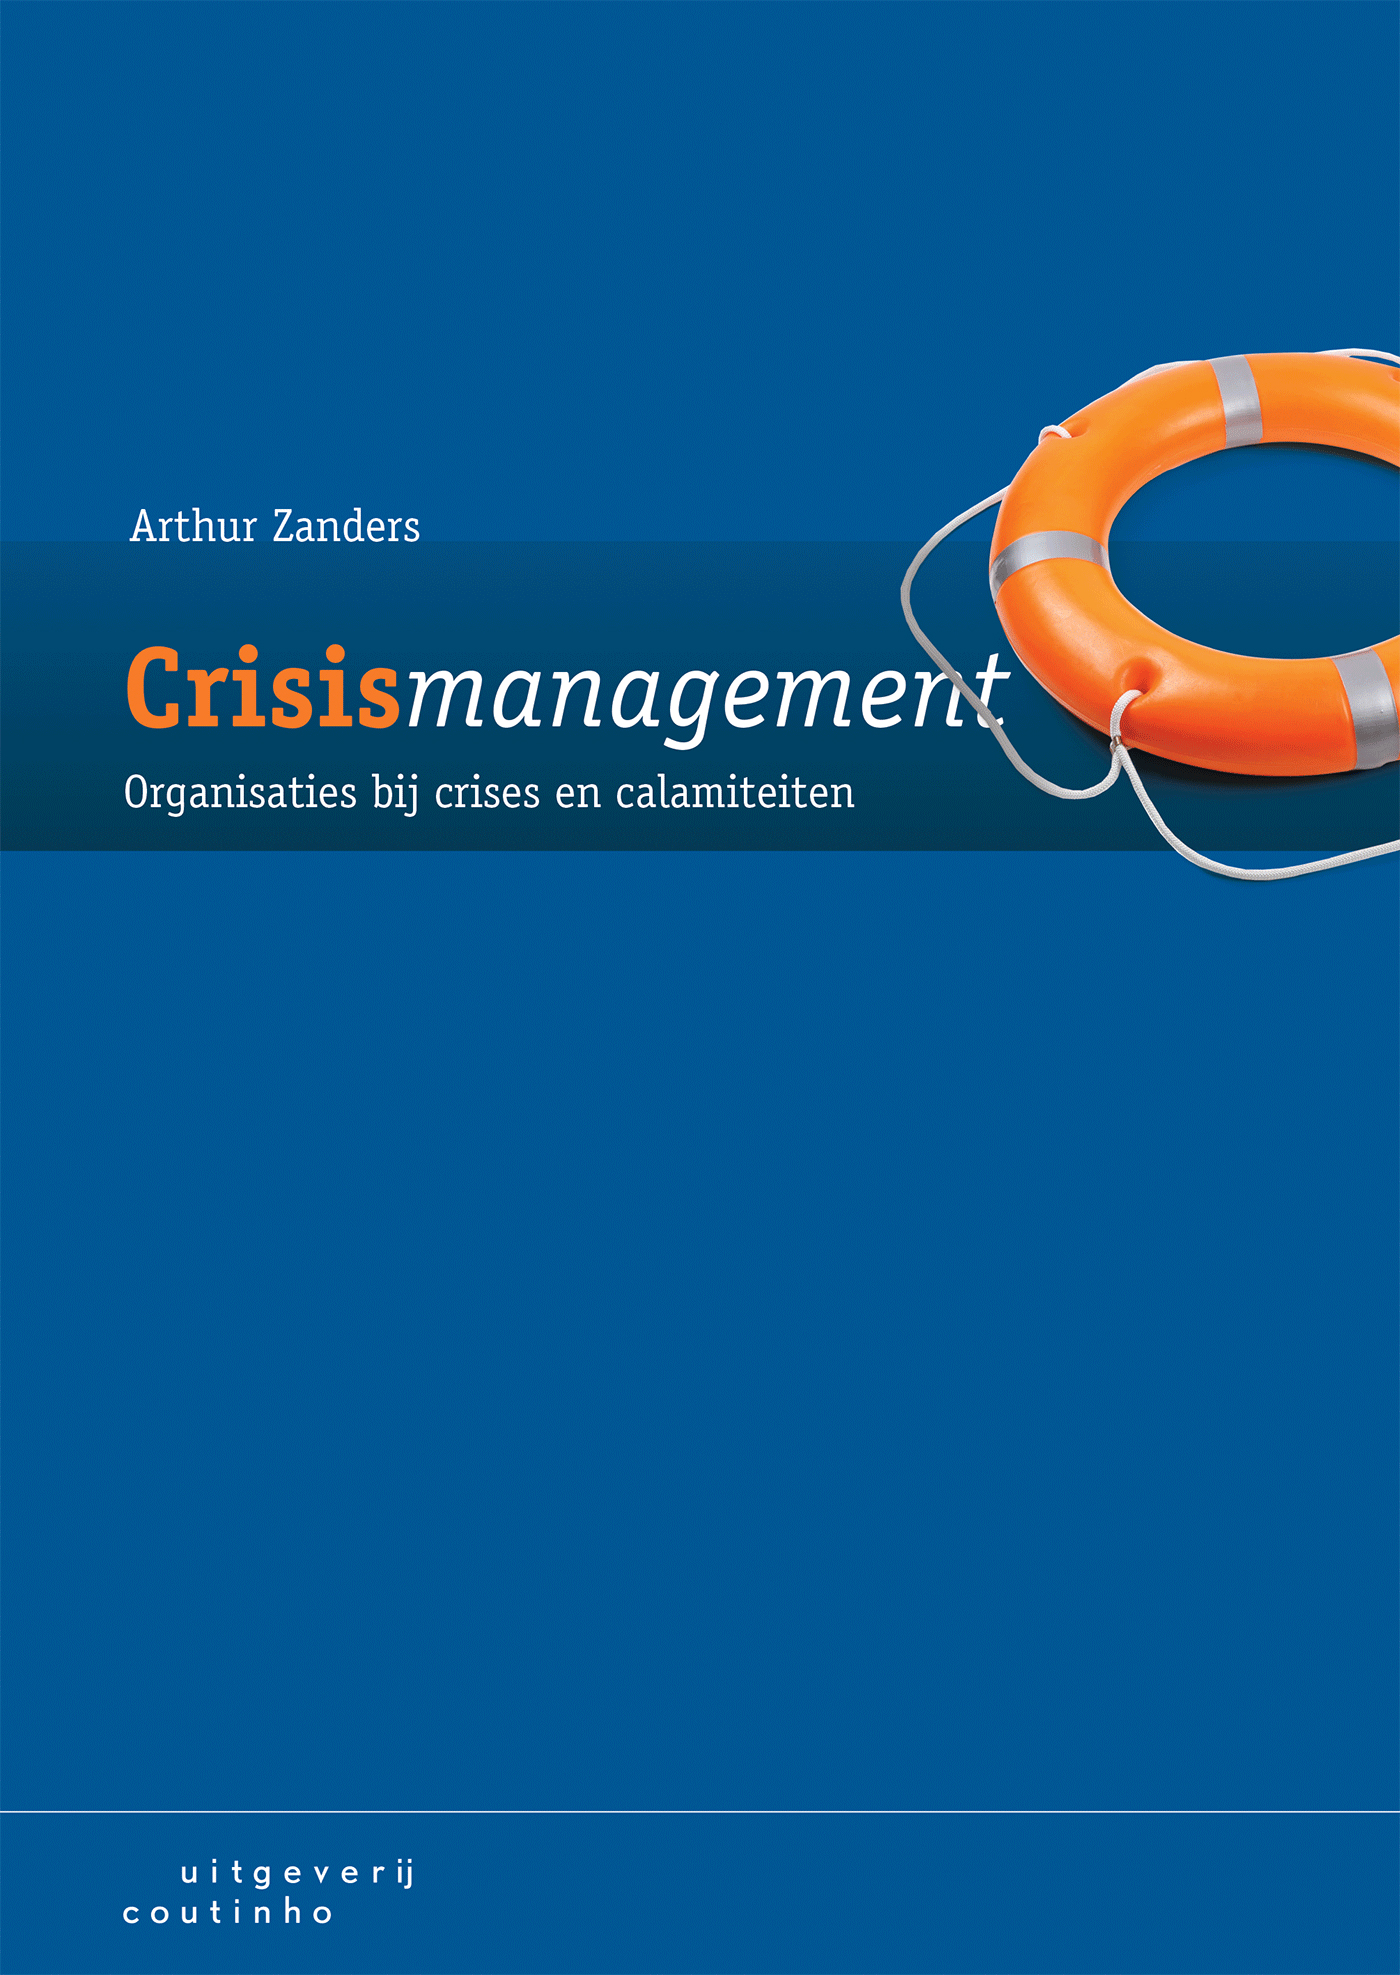 Crisismanagement (Ebook)